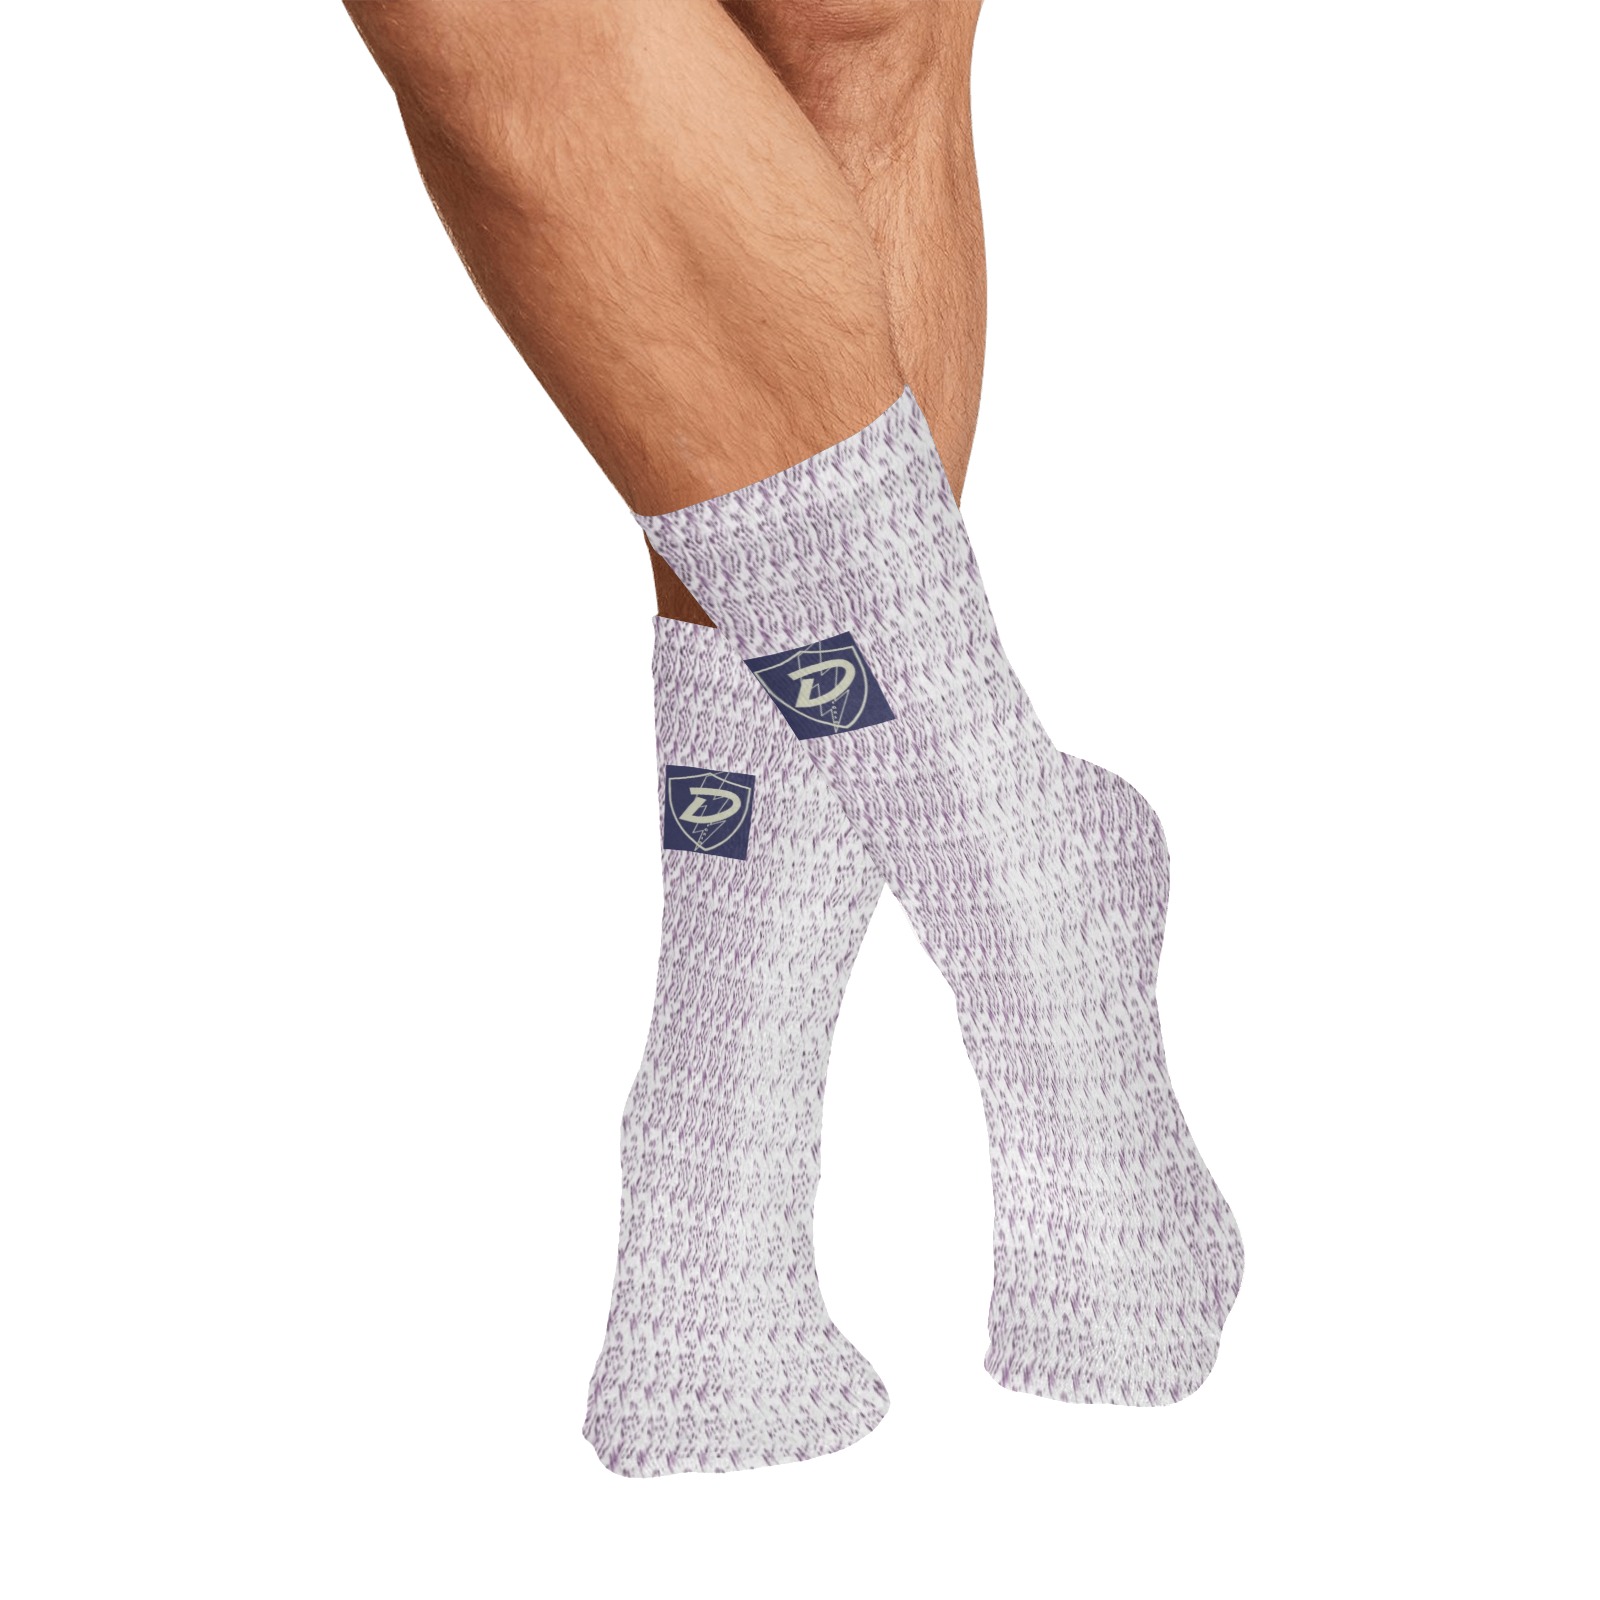 DIONIO Clothing - Athletic Socks (White ) All Over Print Socks for Men